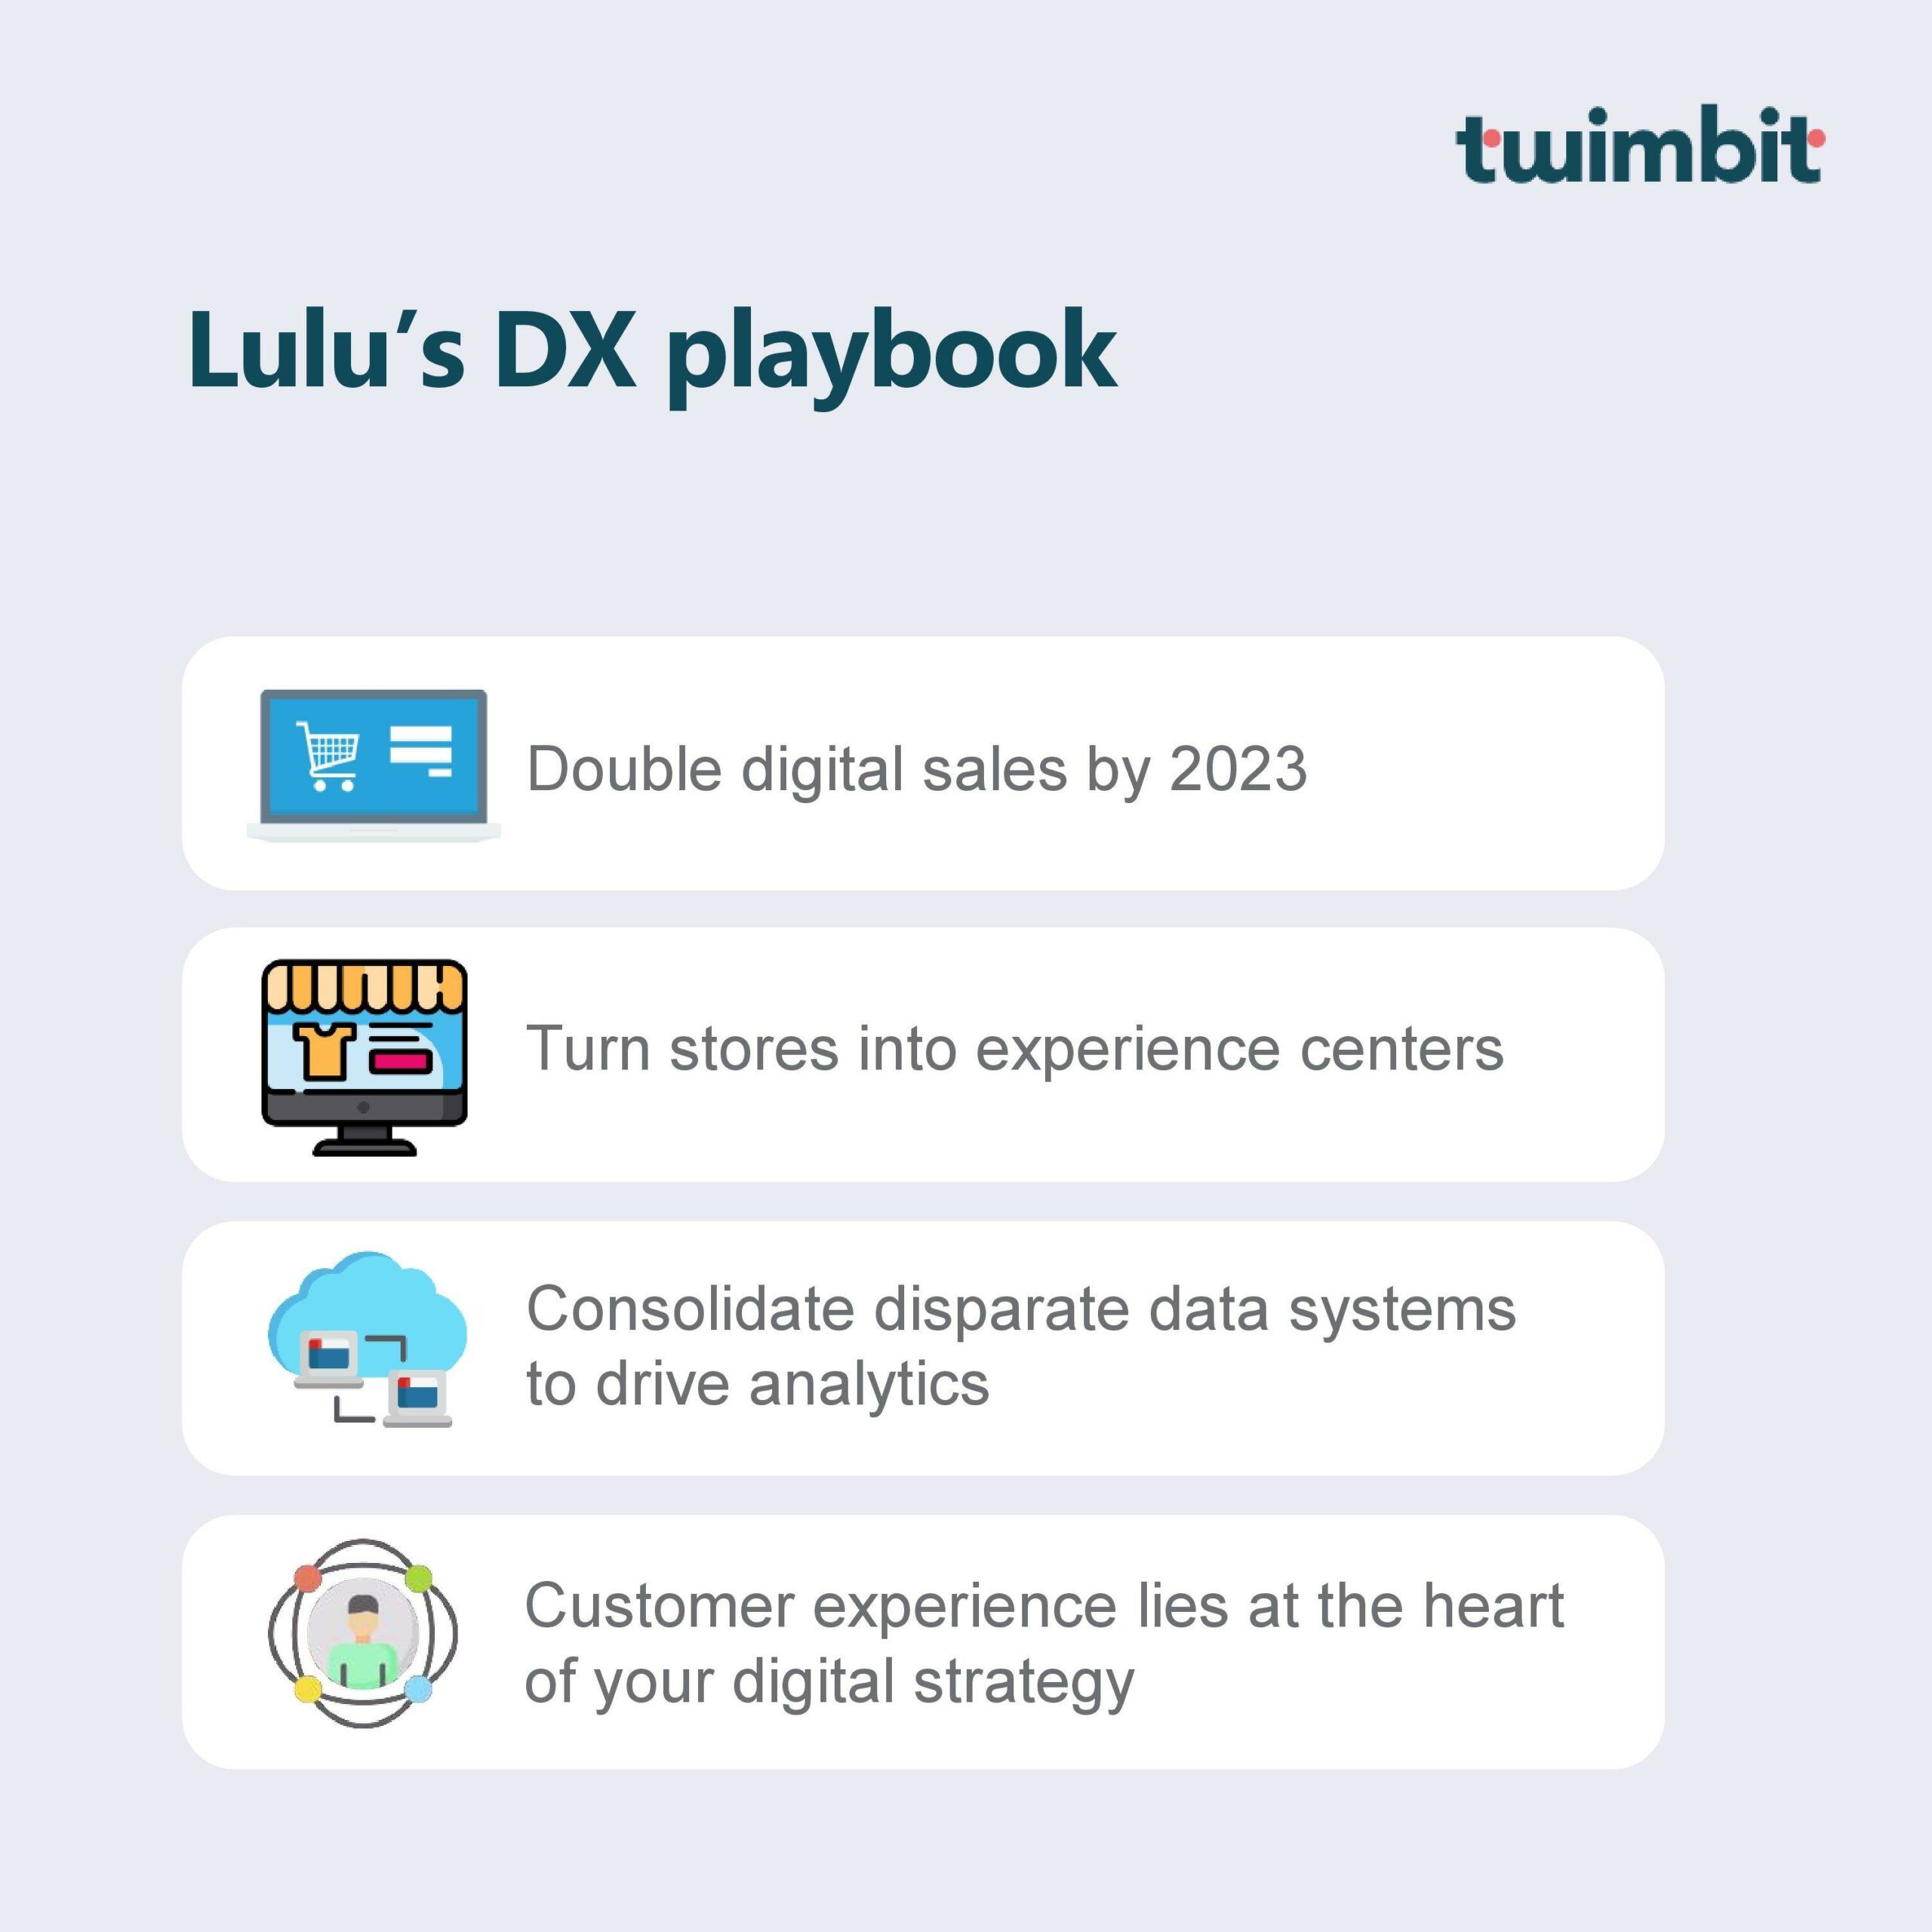 Lululemon's long road to digital transformation - The Logic